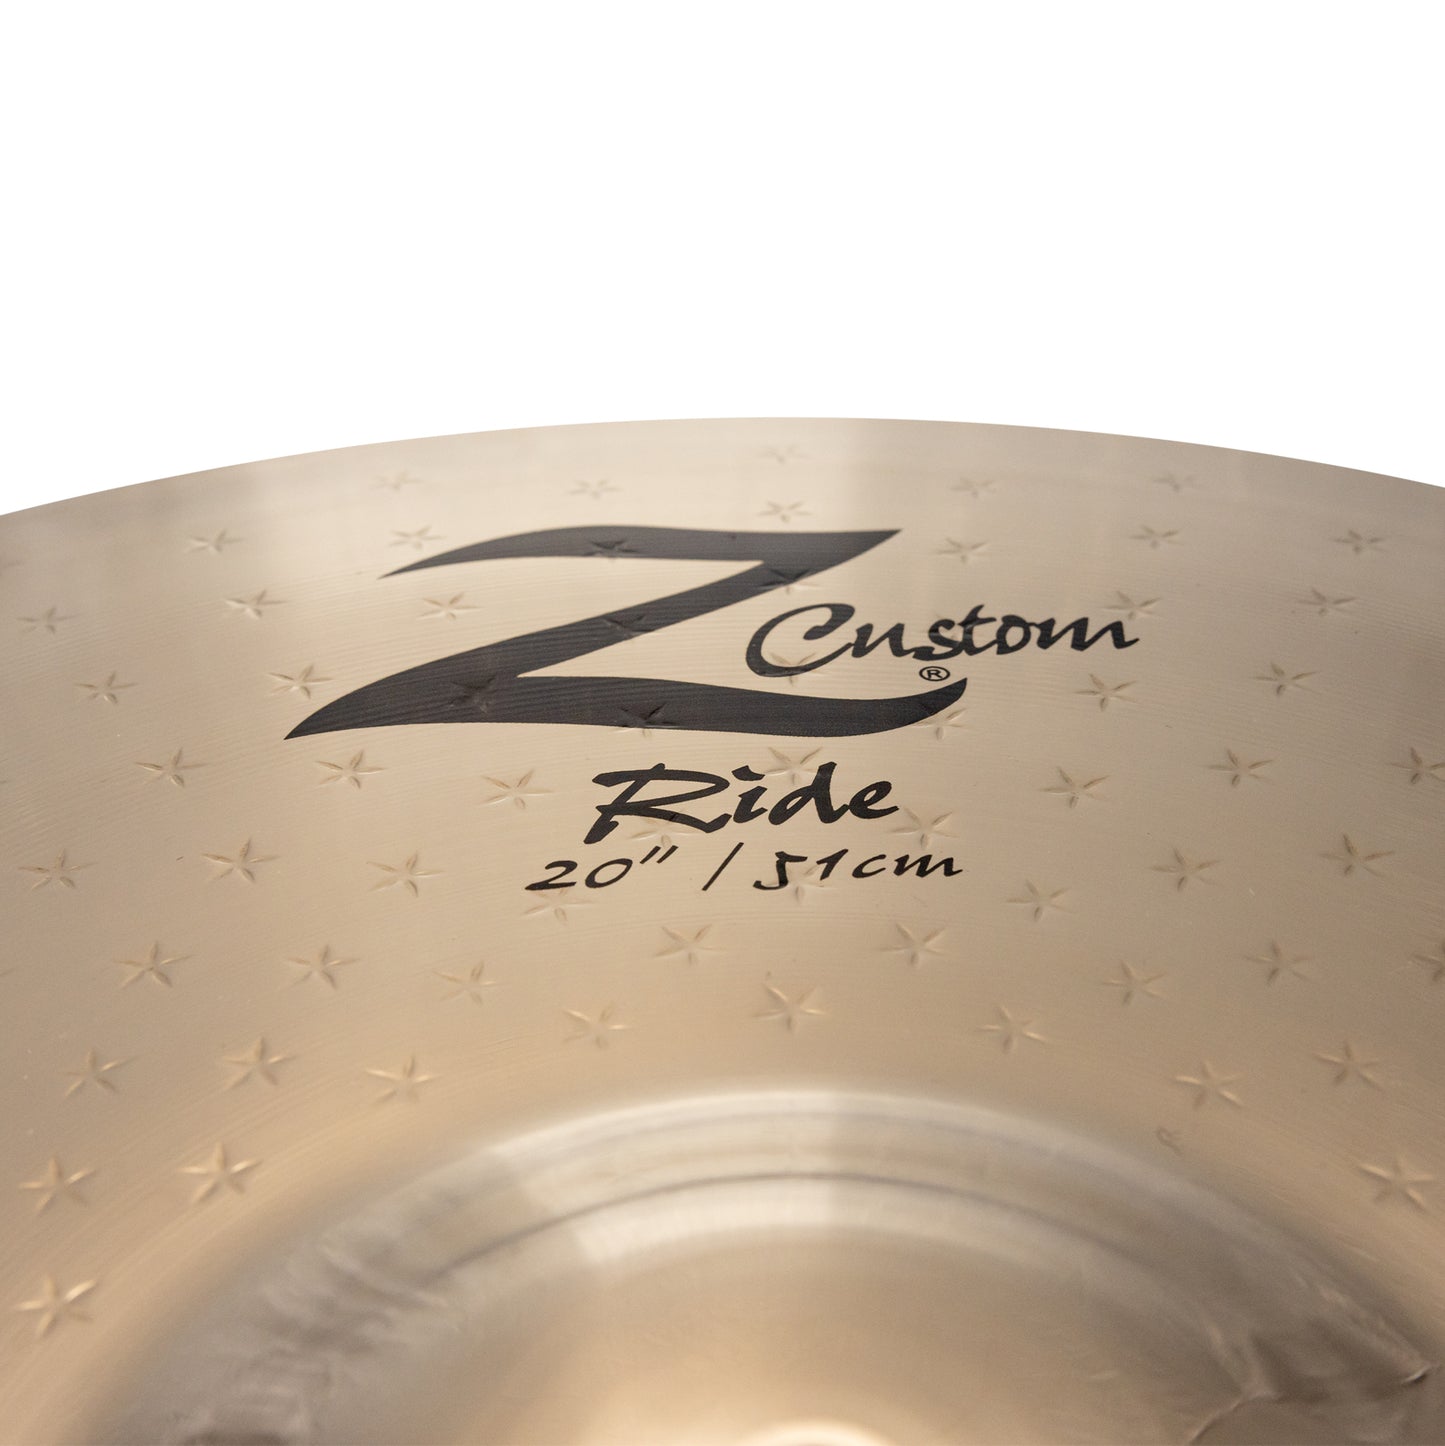 Zildjian Z40120 Z Custom Ride - 20”